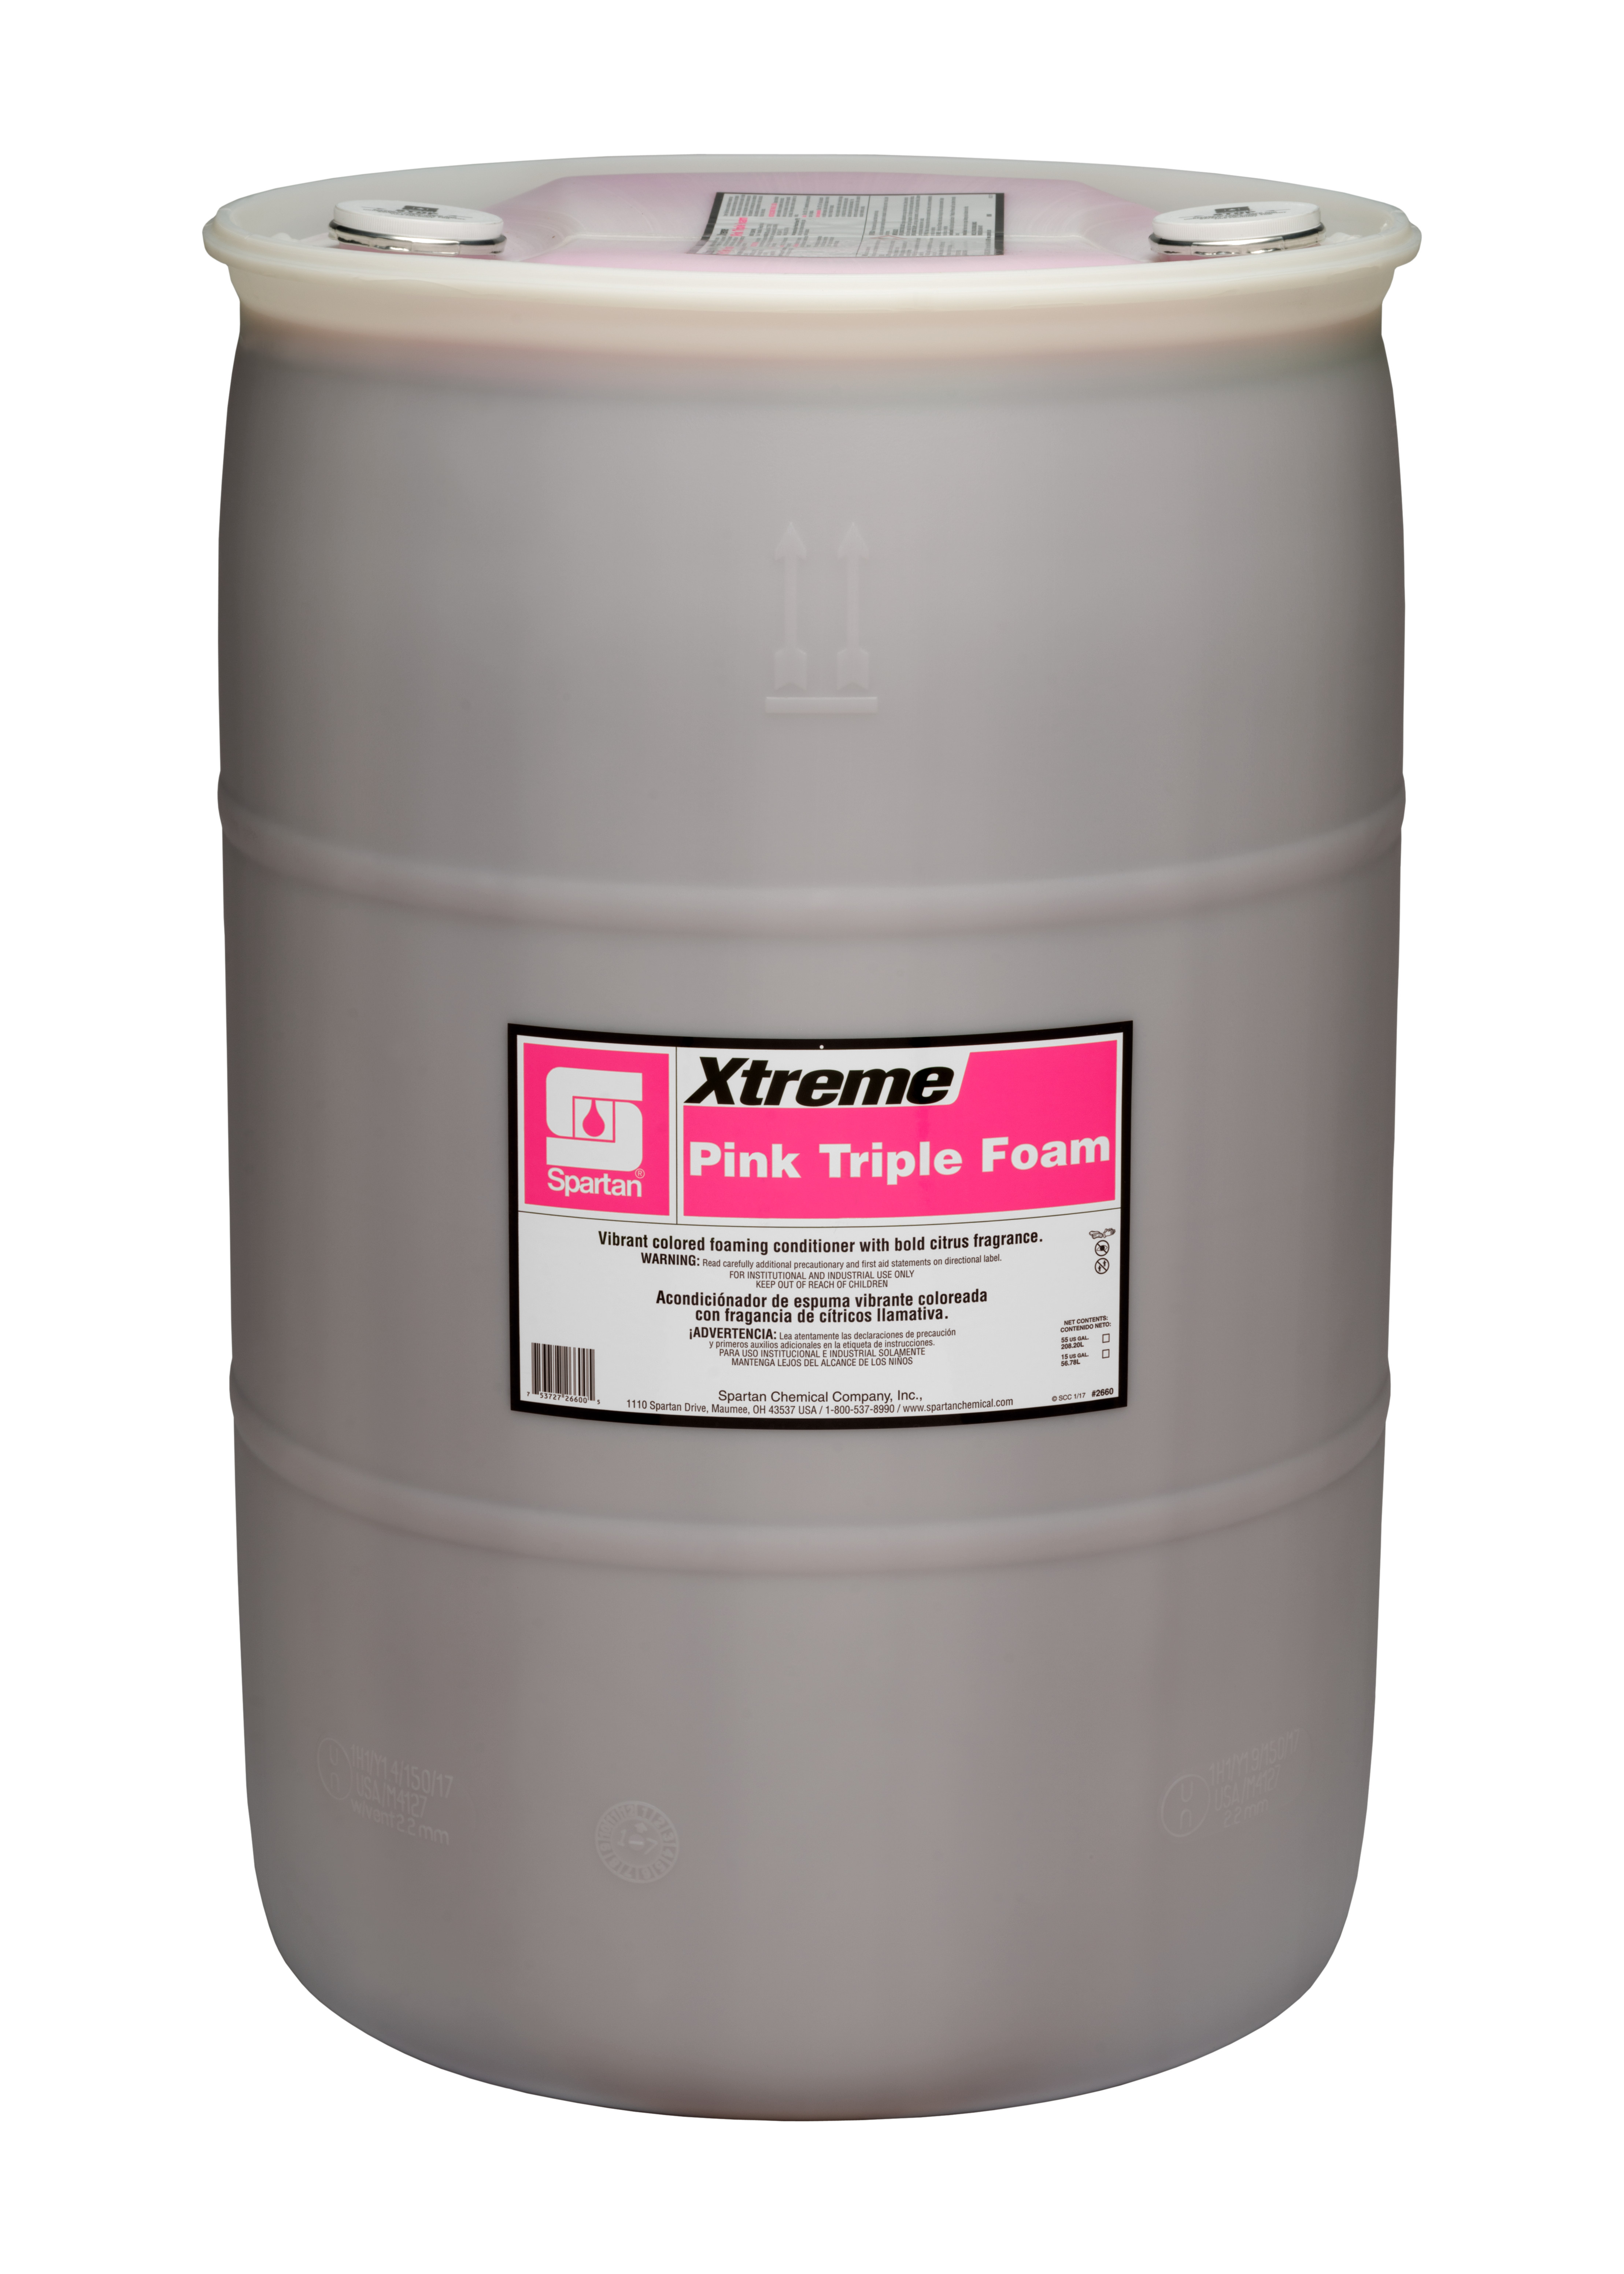 Spartan Chemical Company Xtreme Pink Triple Foam Polish, 55 GAL DRUM